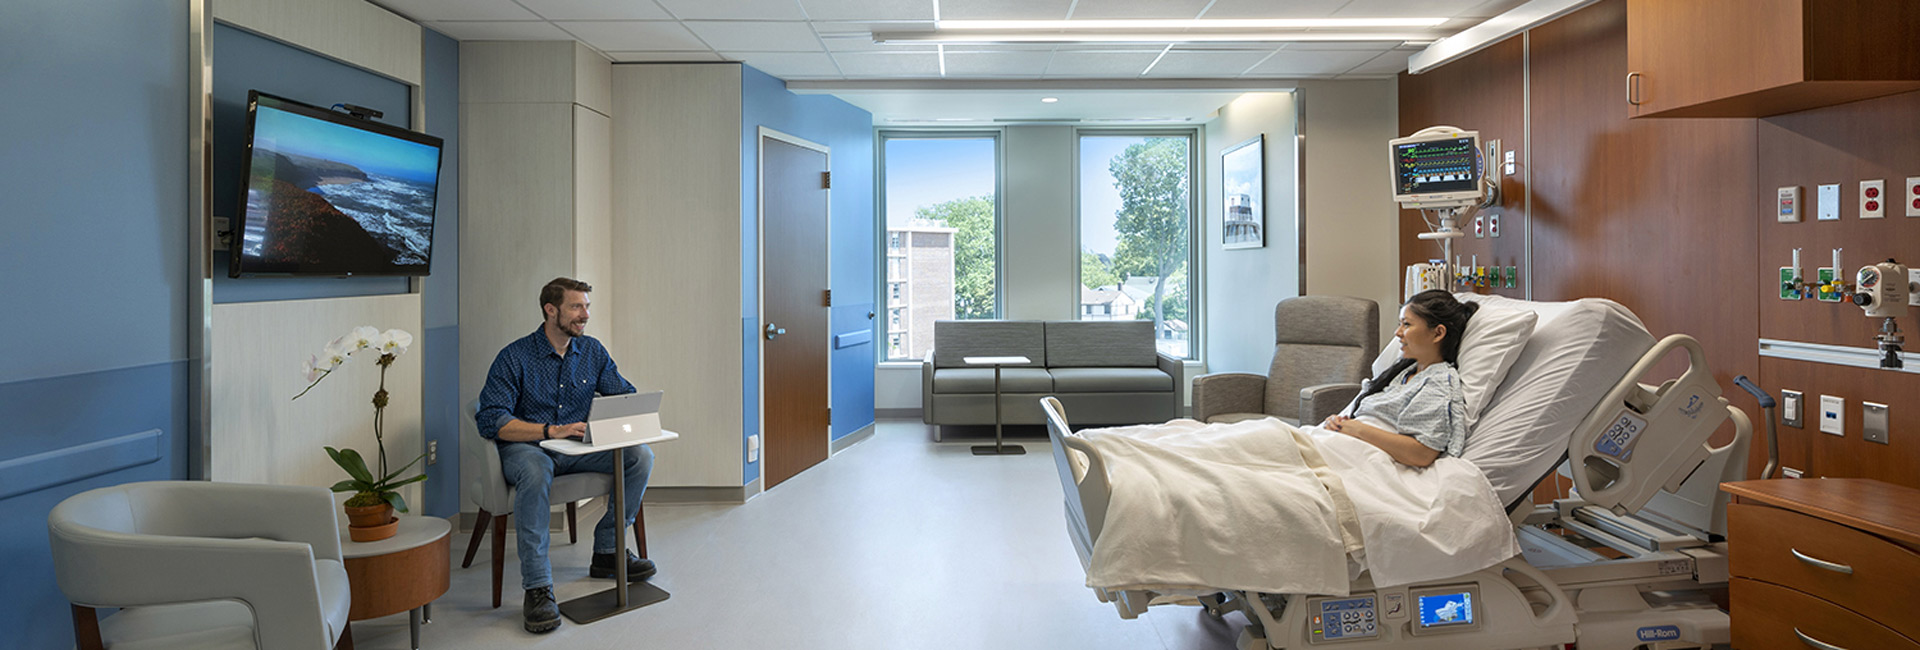 Richmond University Medical Center Intensive Care Unit Room